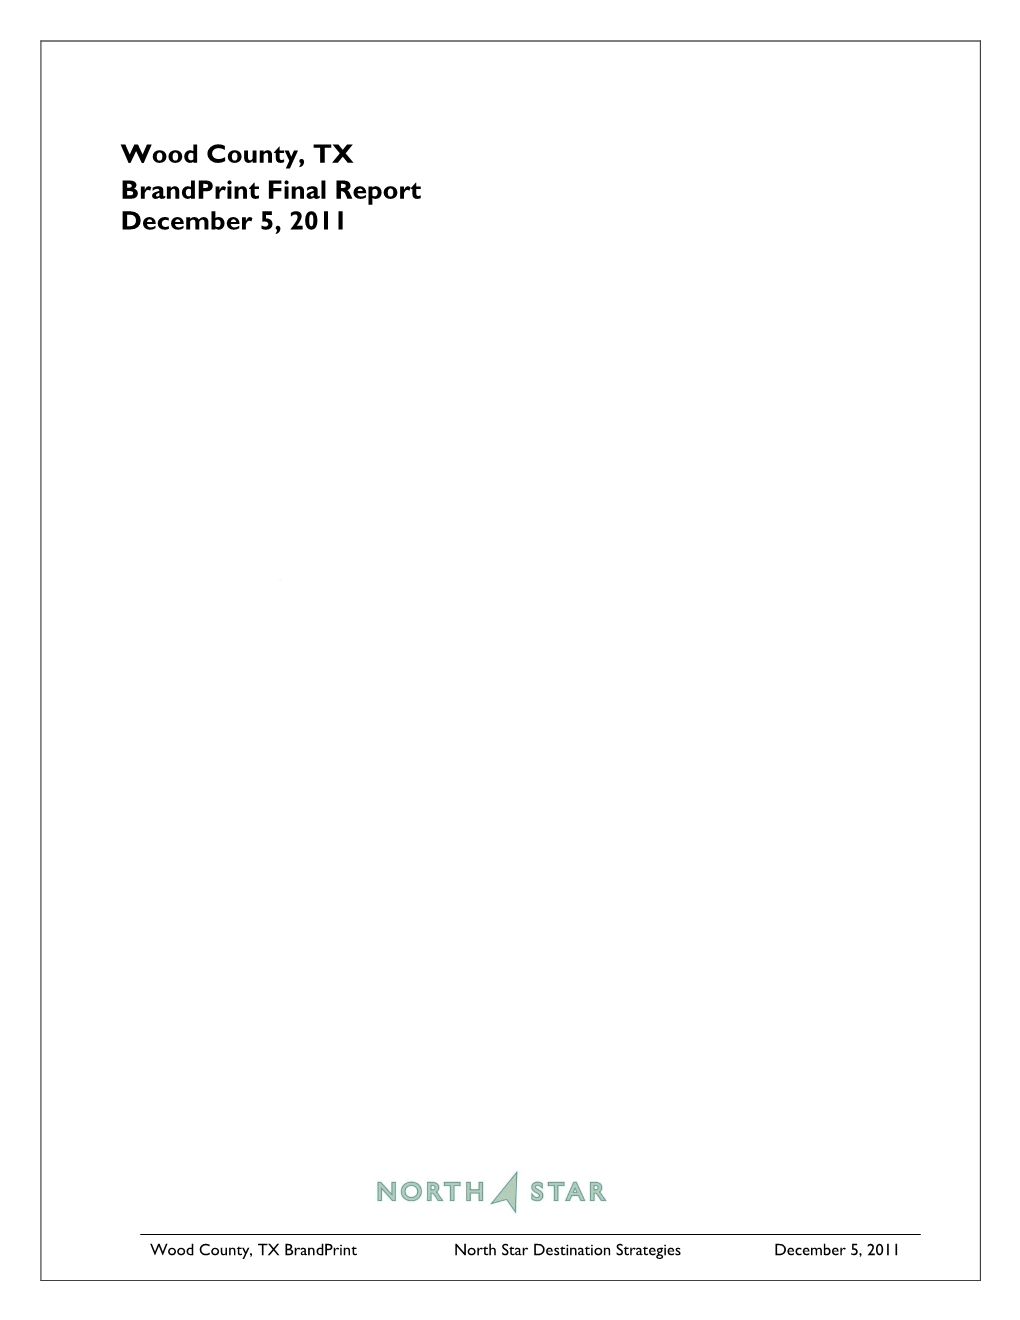 Wood County Final Branding Report ABRIDGED A.Pdf